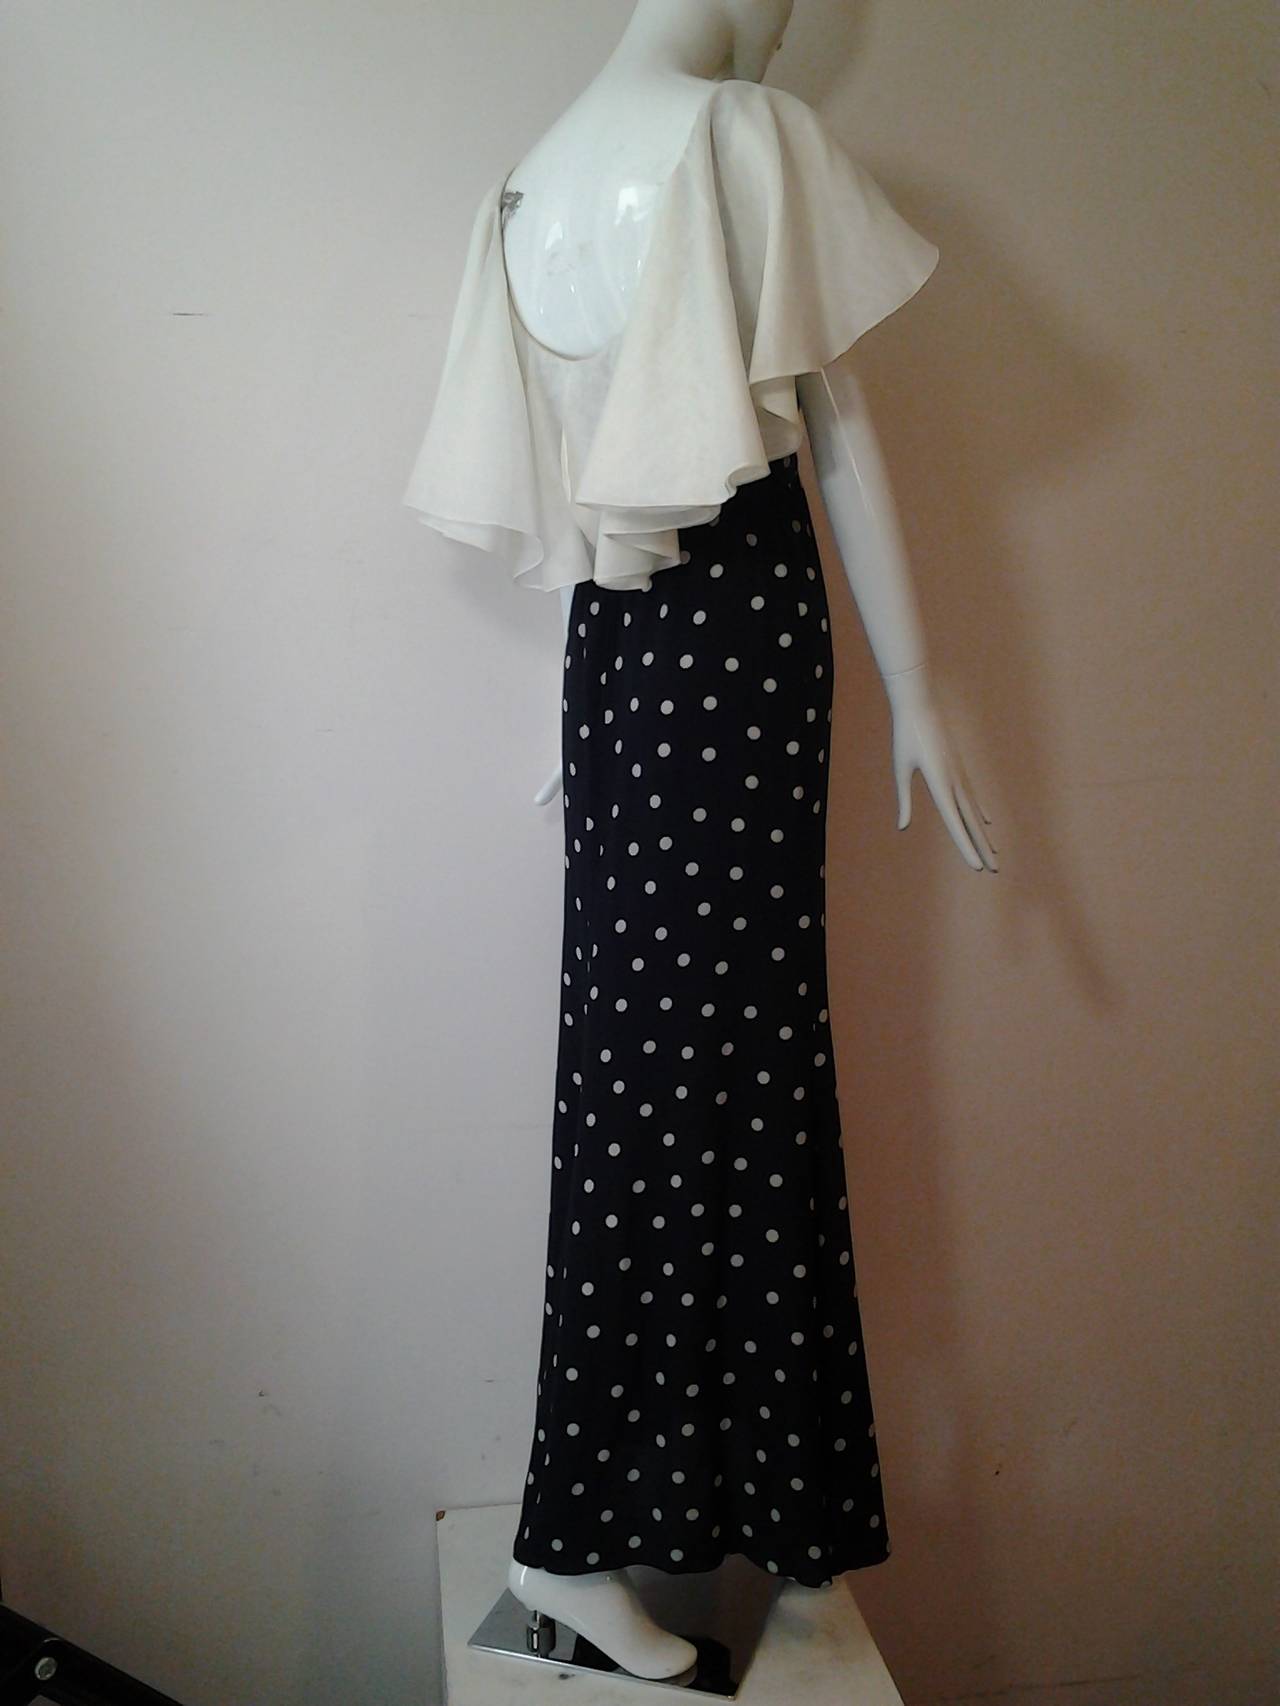 1970s Oscar de la Renta black and cream silk polkadot gown.  1930s inspired silhouette. Low back.